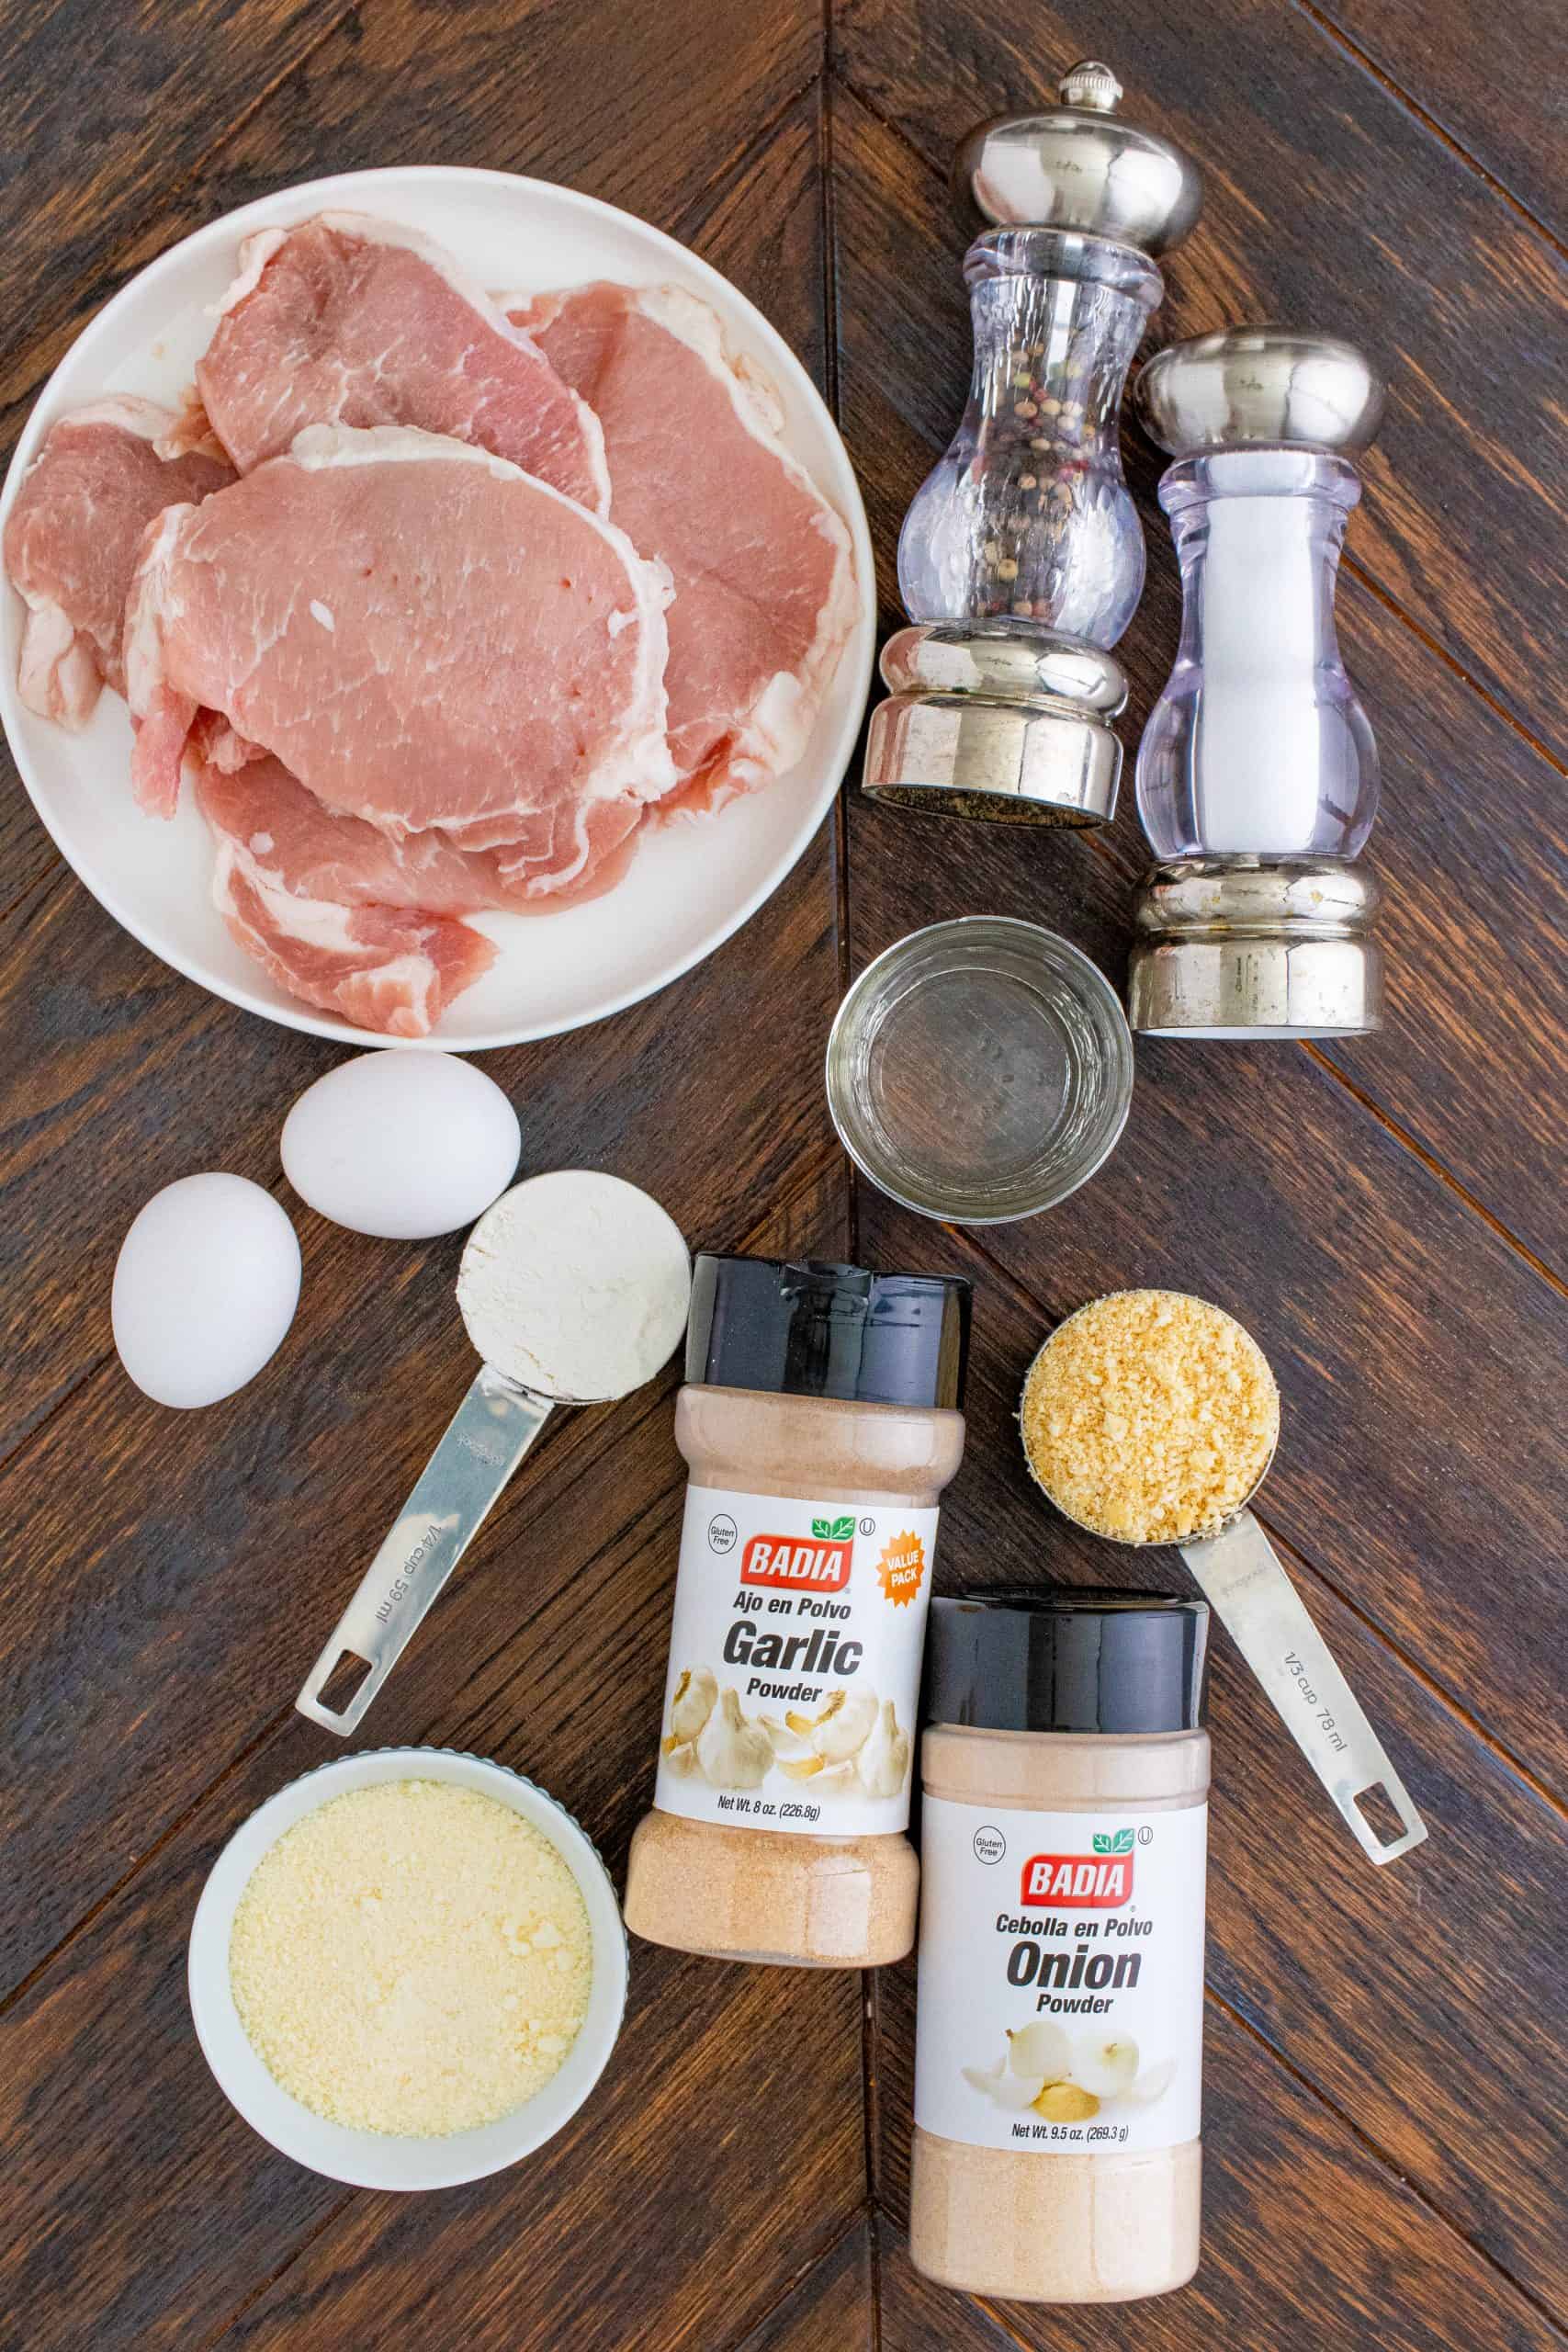 Ingredients needed to make Air Fryer Pork Chops: all-purpose flour, salt and pepper, thin-cut boneless pork chops, eggs, water, club crackers, parmesan cheese, garlic powder, onion powder.